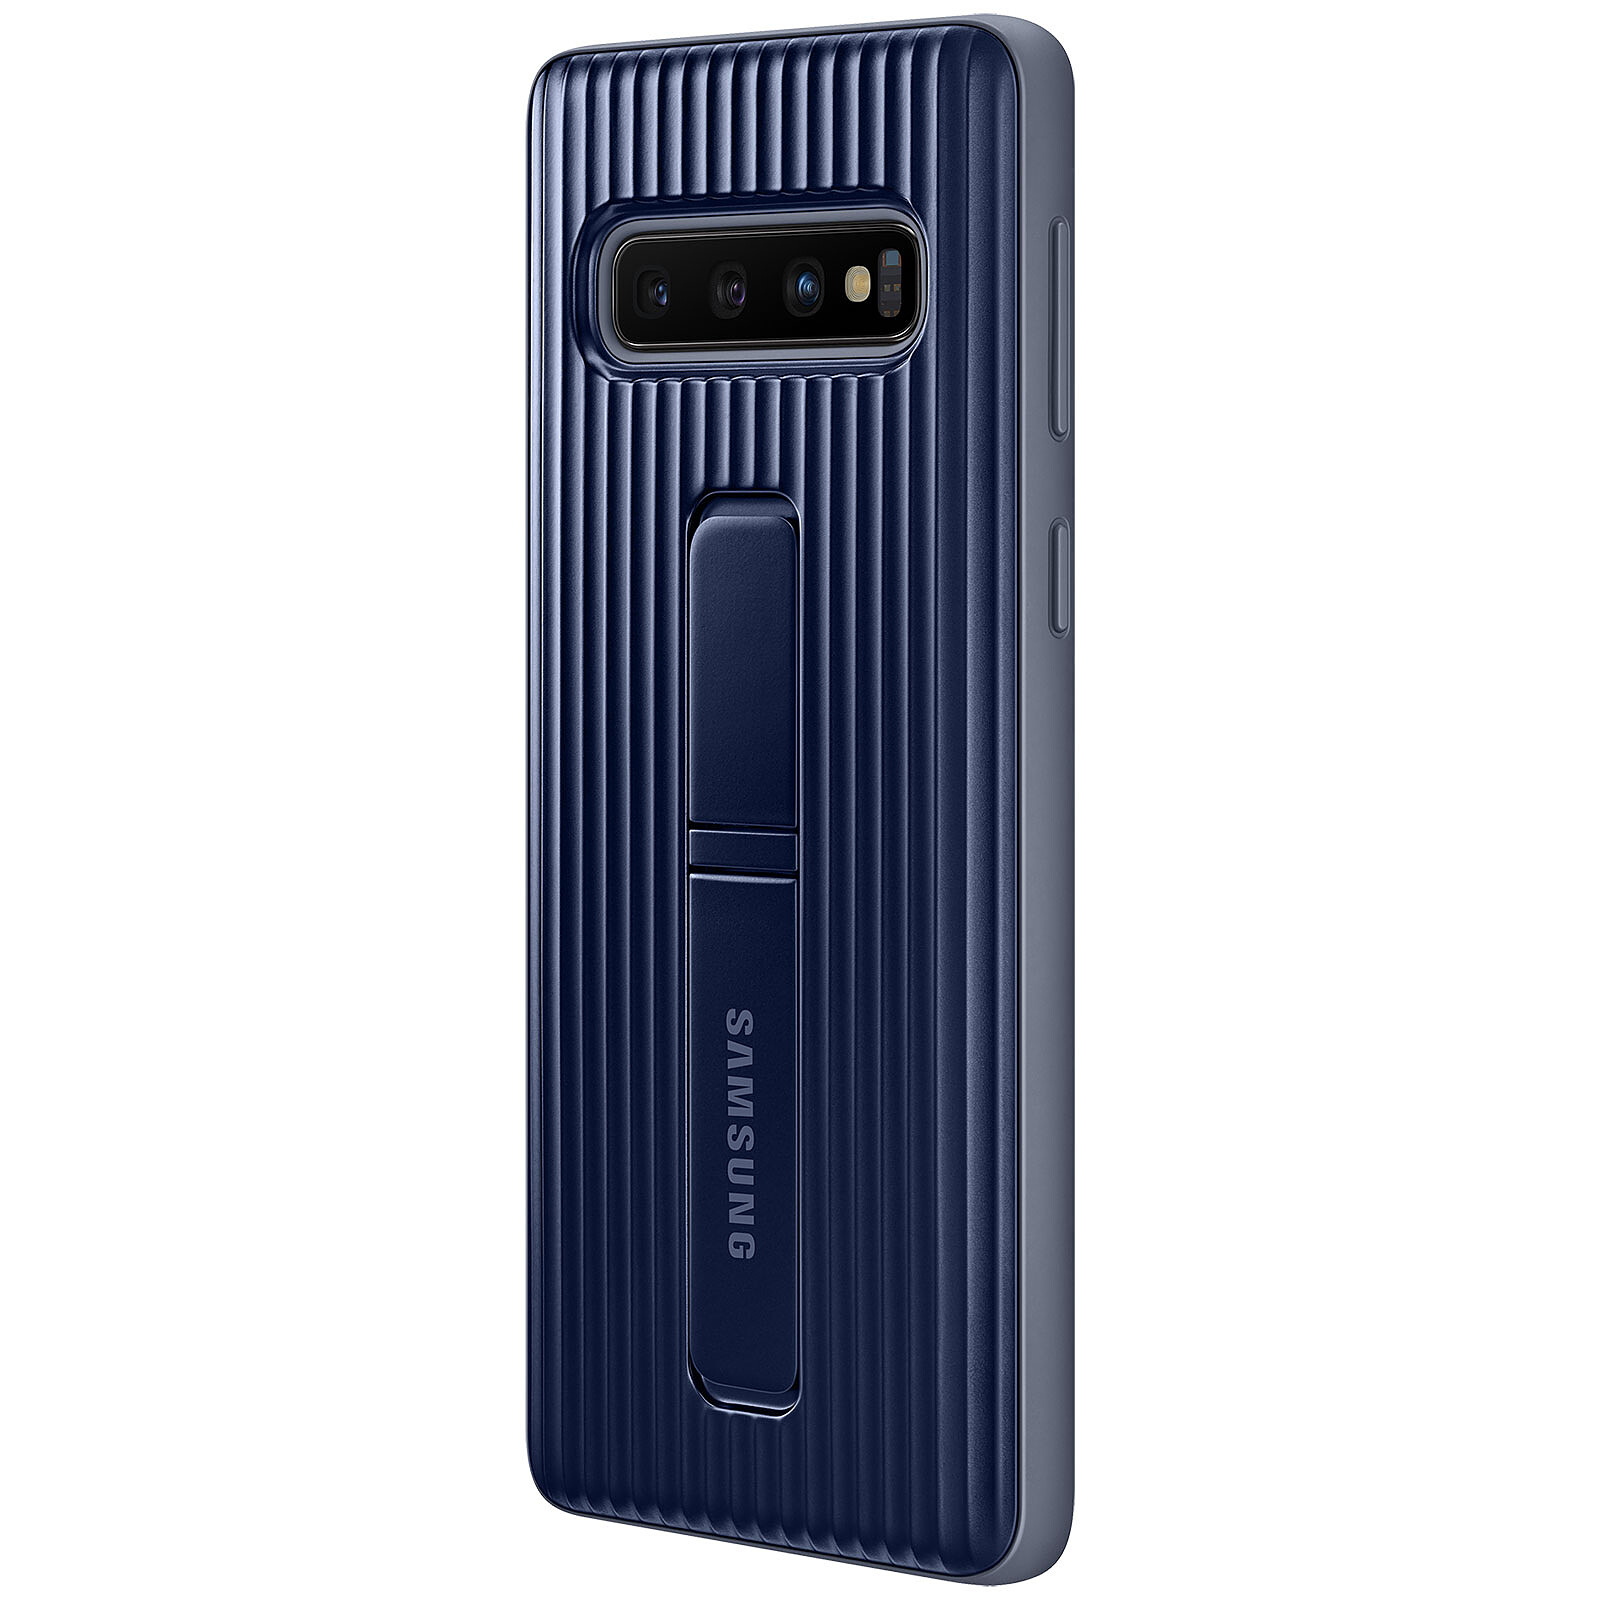 Hpory Coque de protection en silicone pour Samsung Galaxy S10 à 360° Noir